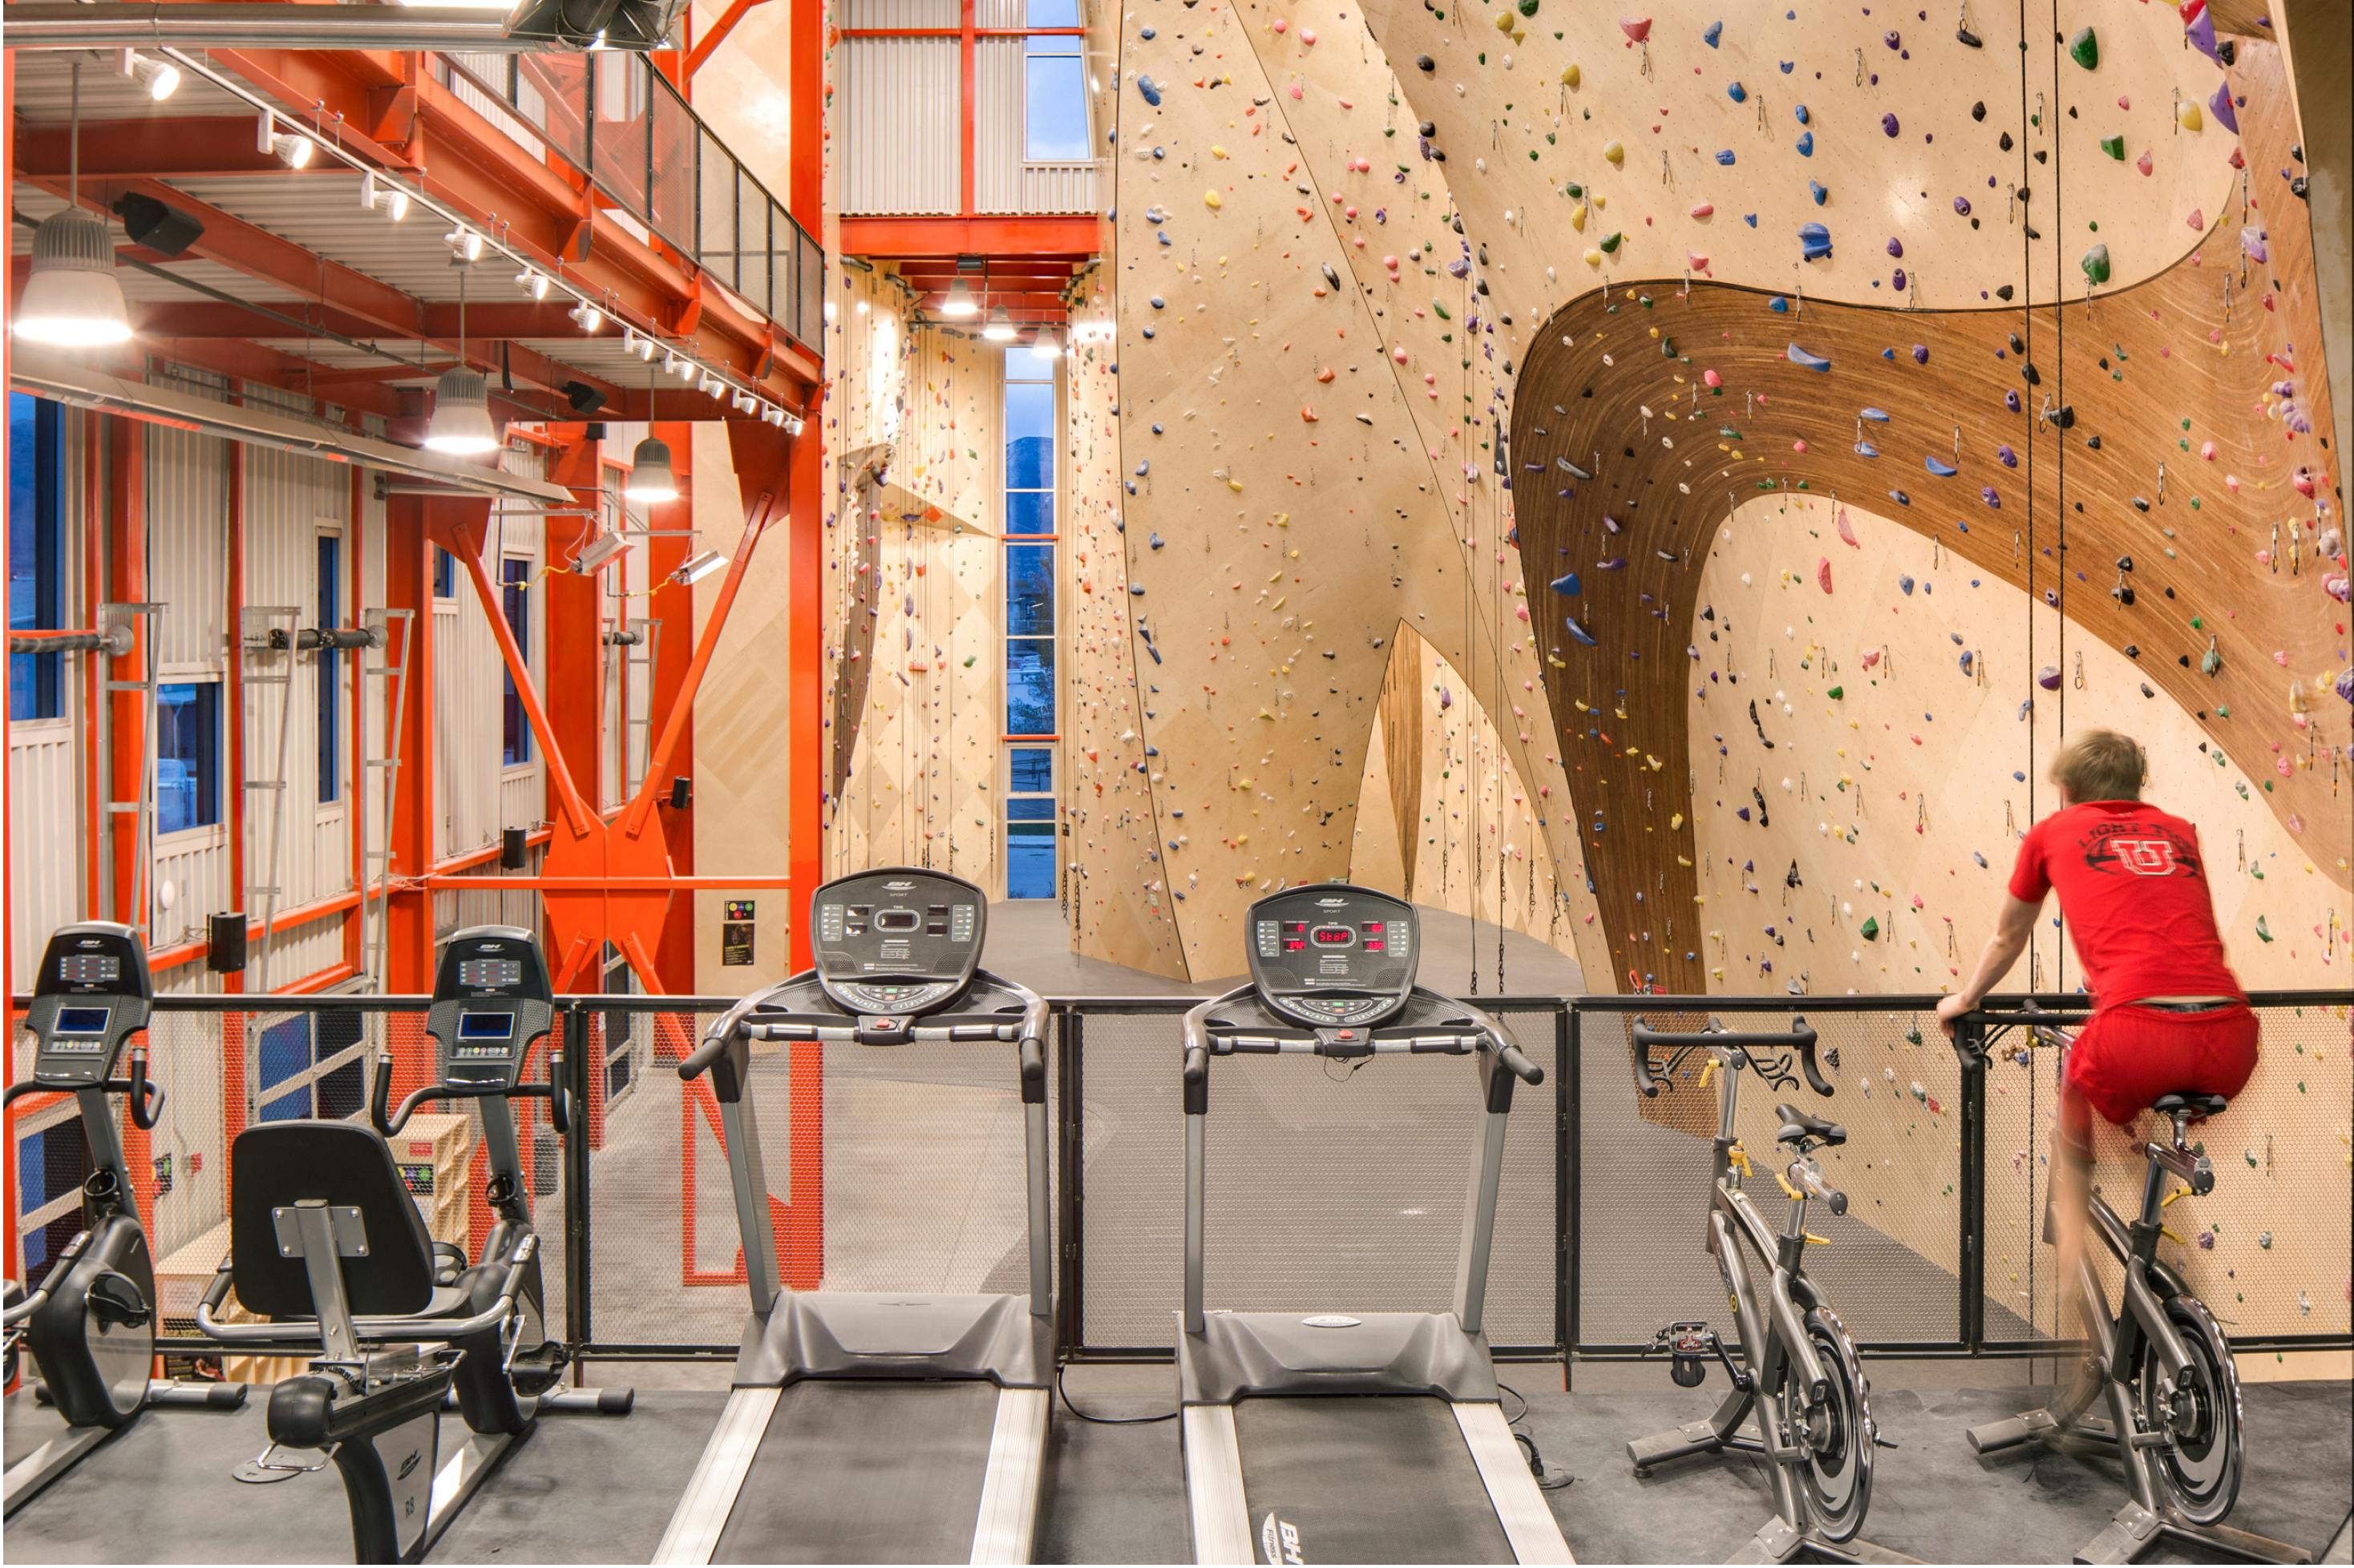 A man on a spin bike overlooks an indoor climbing gym